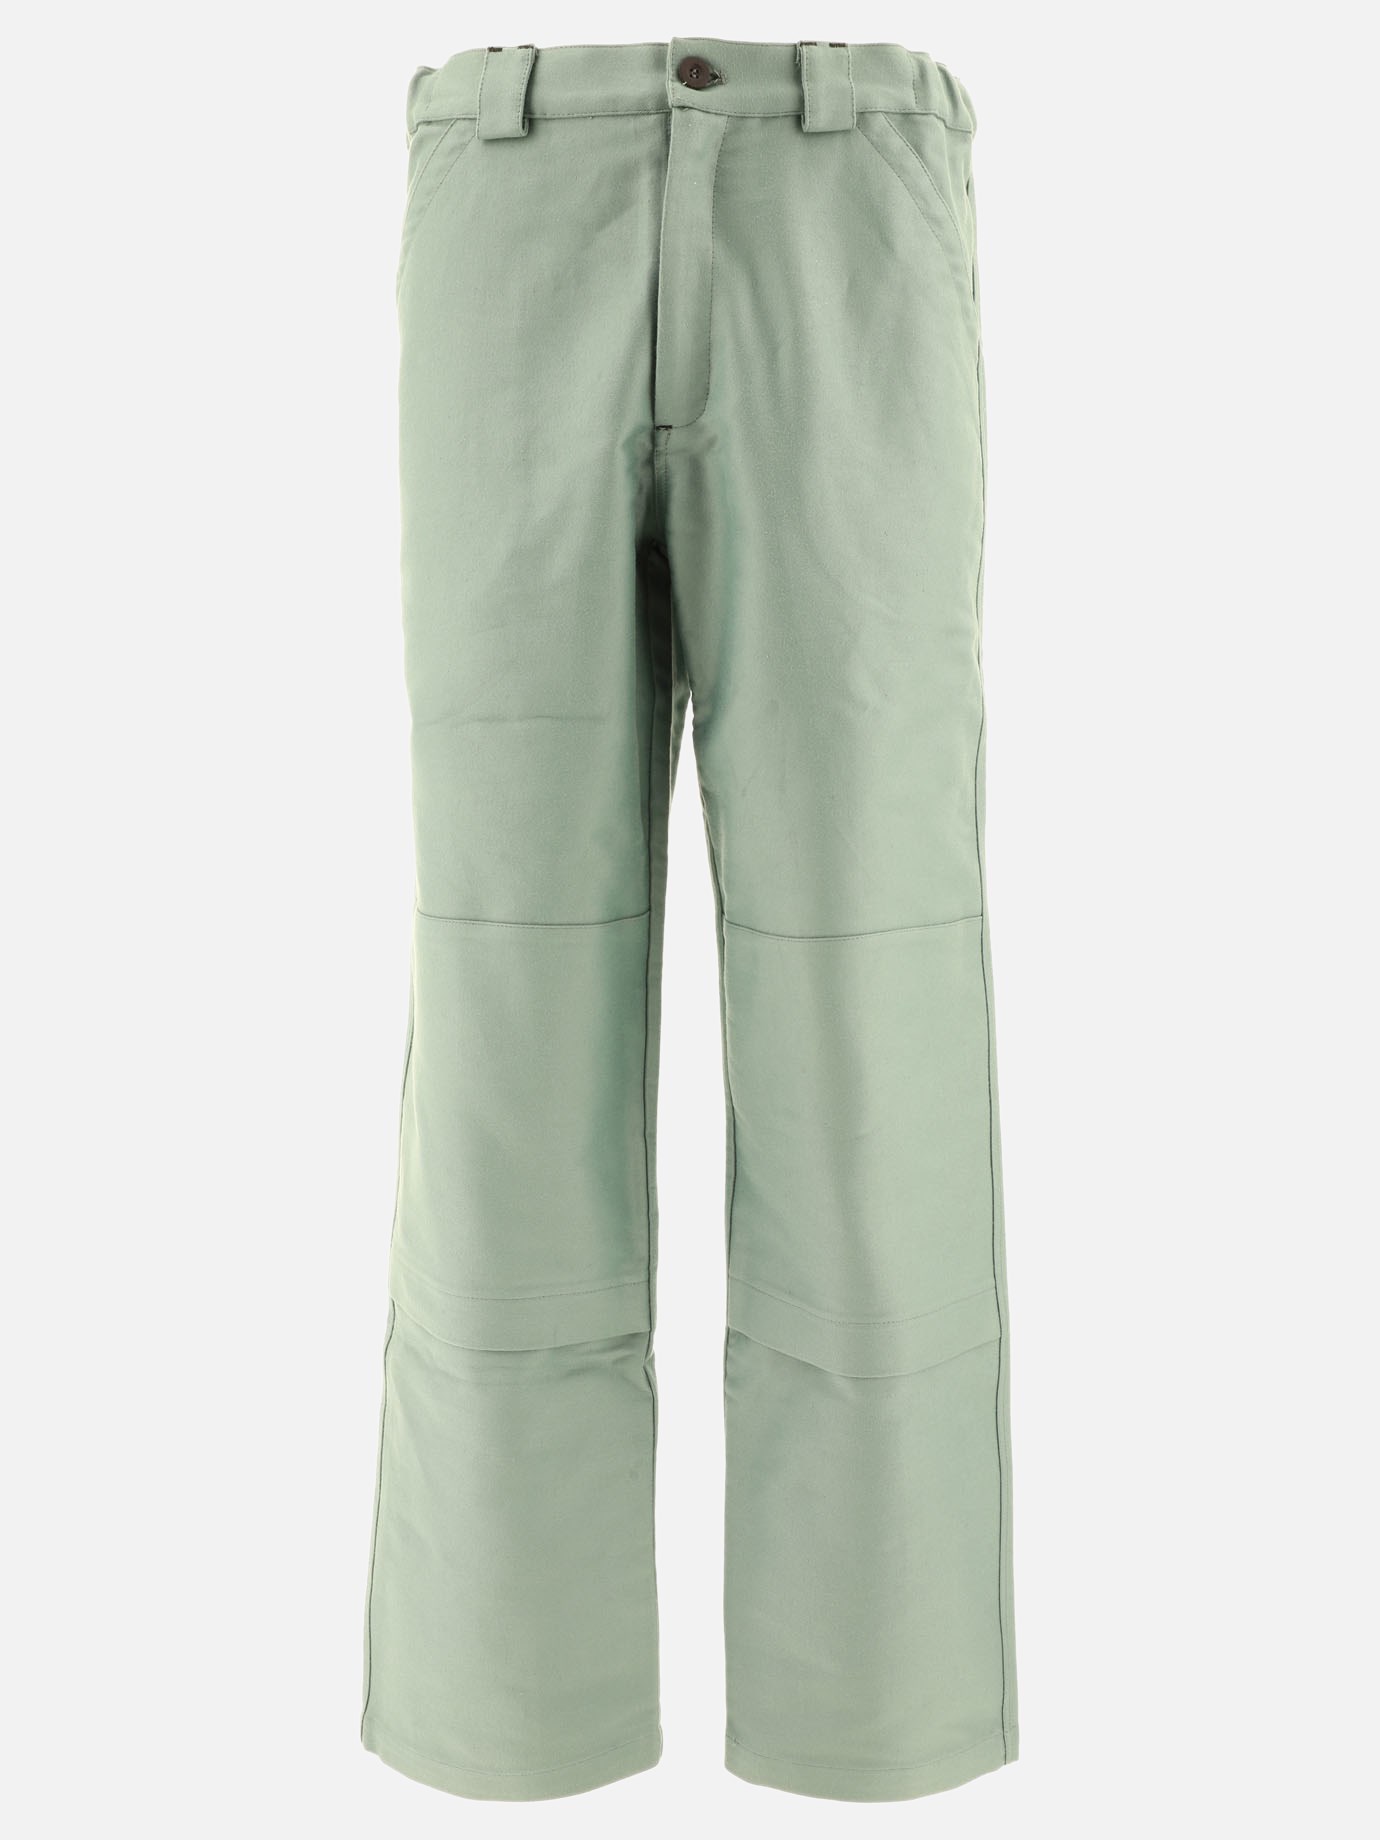 Pantaloni  Replicated Bold Fustian  by Gr10K